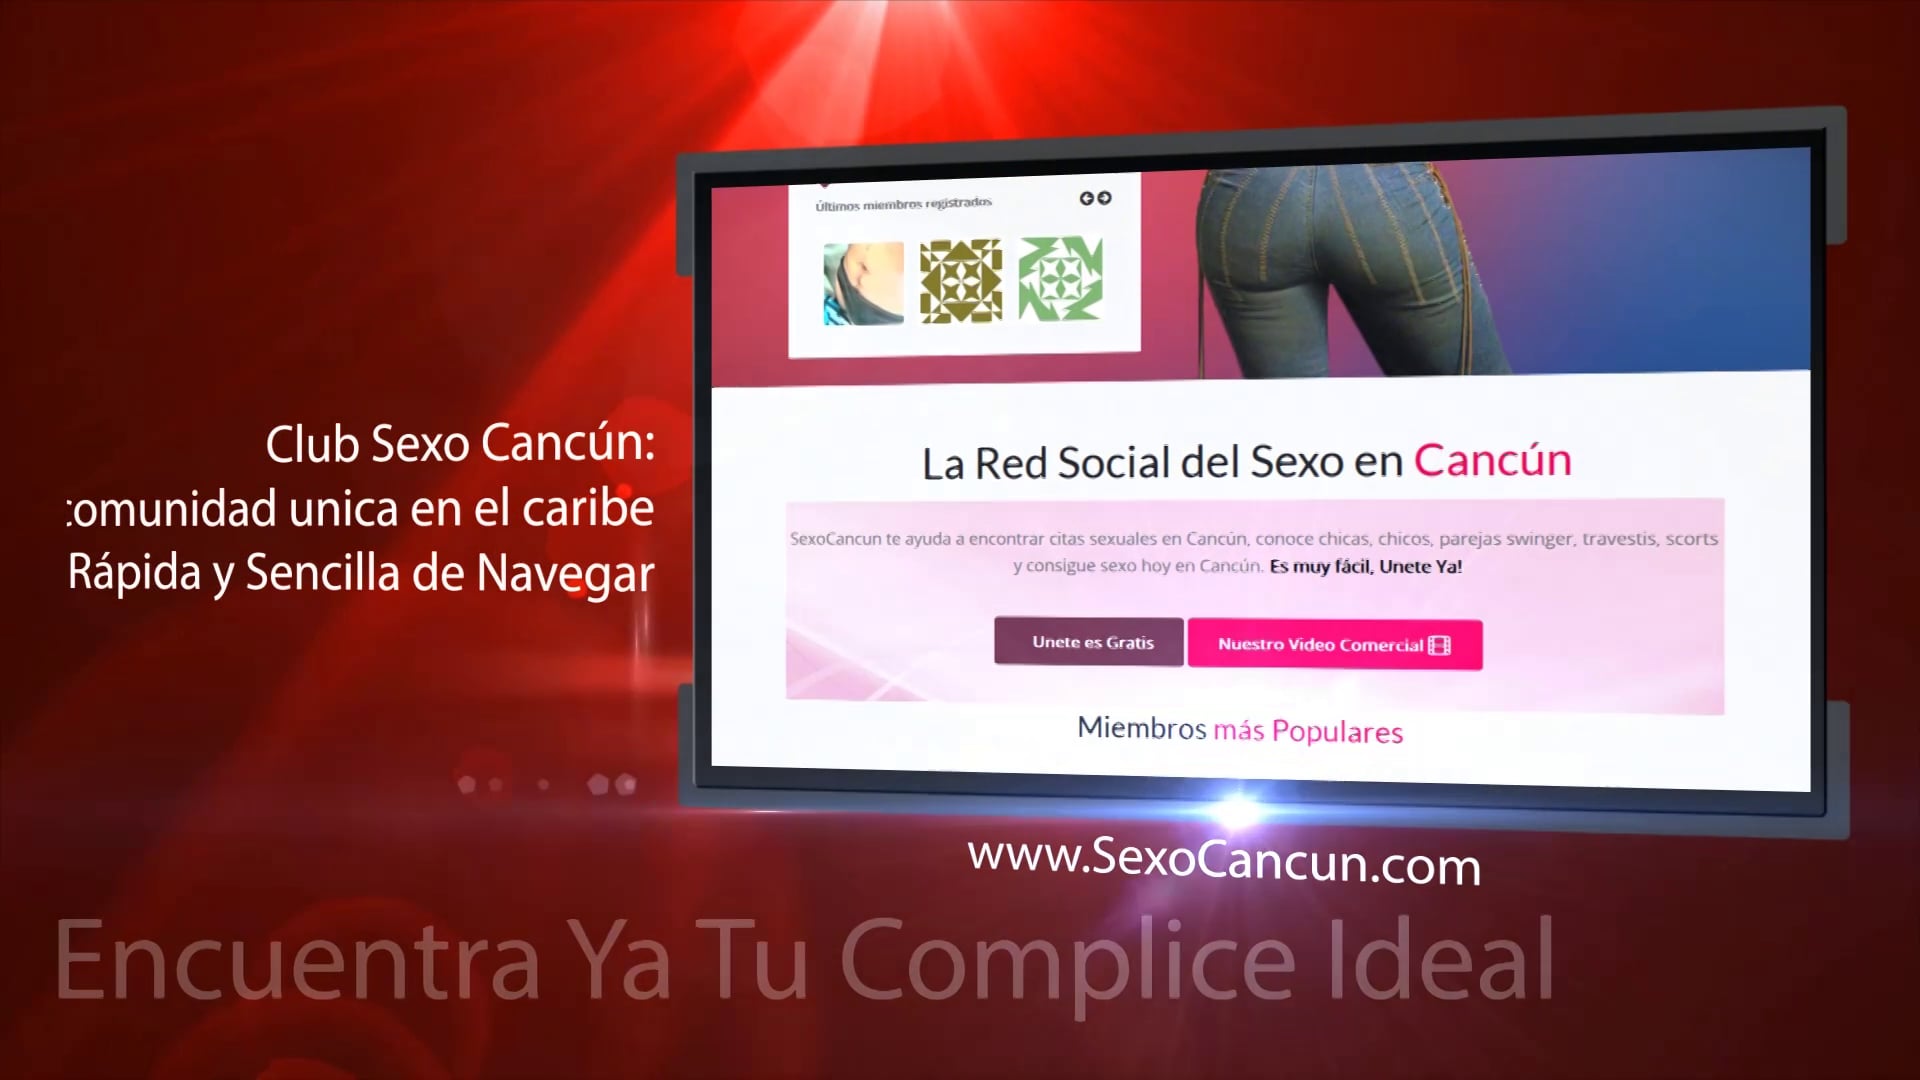 Sexo Cancun on Vimeo